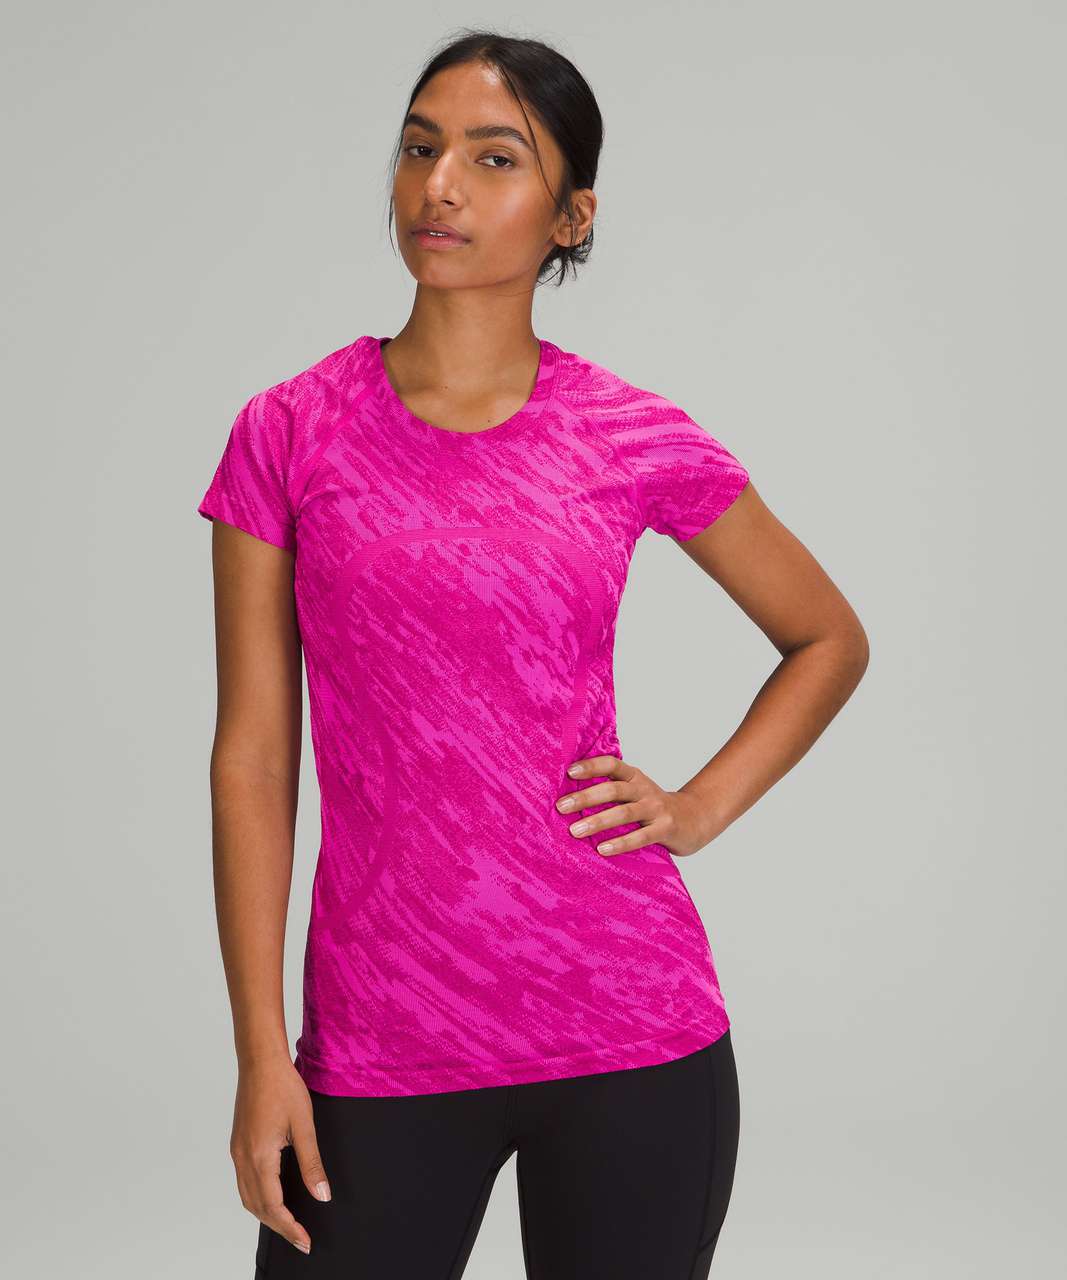 Lululemon Swiftly Tech Short Sleeve Shirt 2.0 - Mesh Camo Pow Pink / Ripened Raspberry